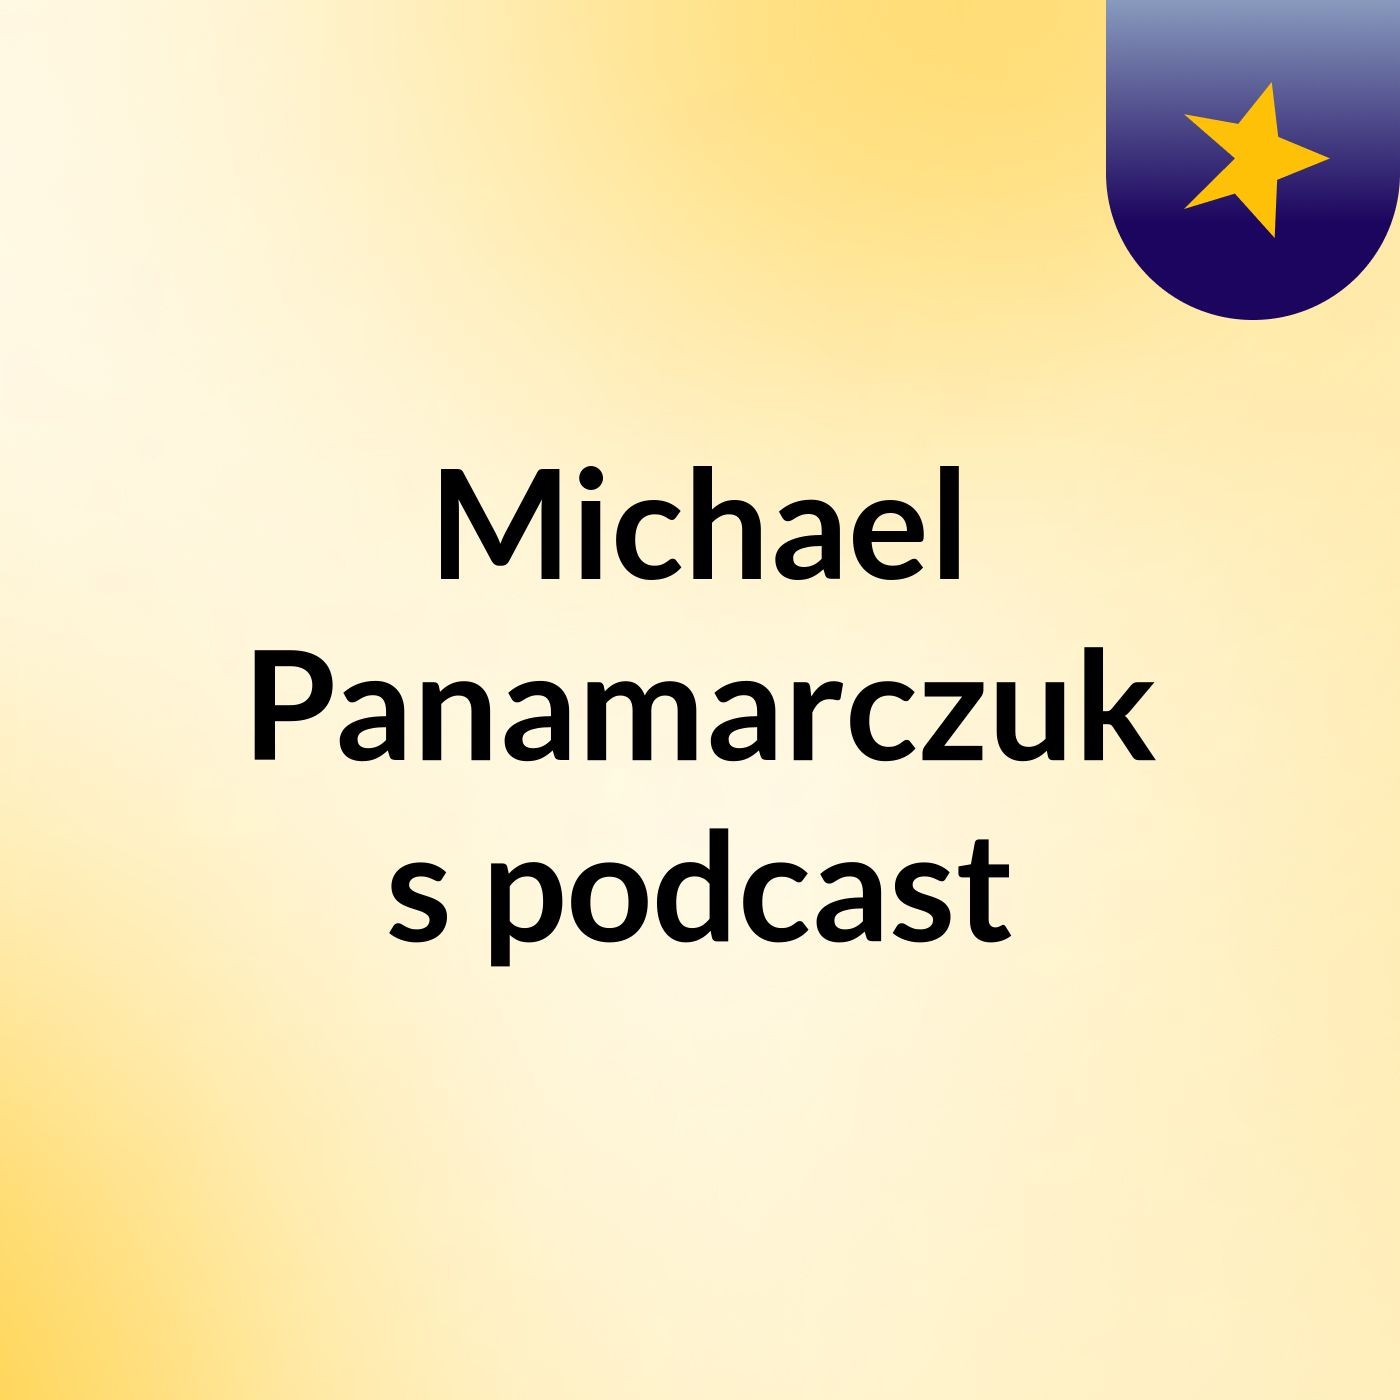 Episode 11 - Michael Panamarczuk's podcast